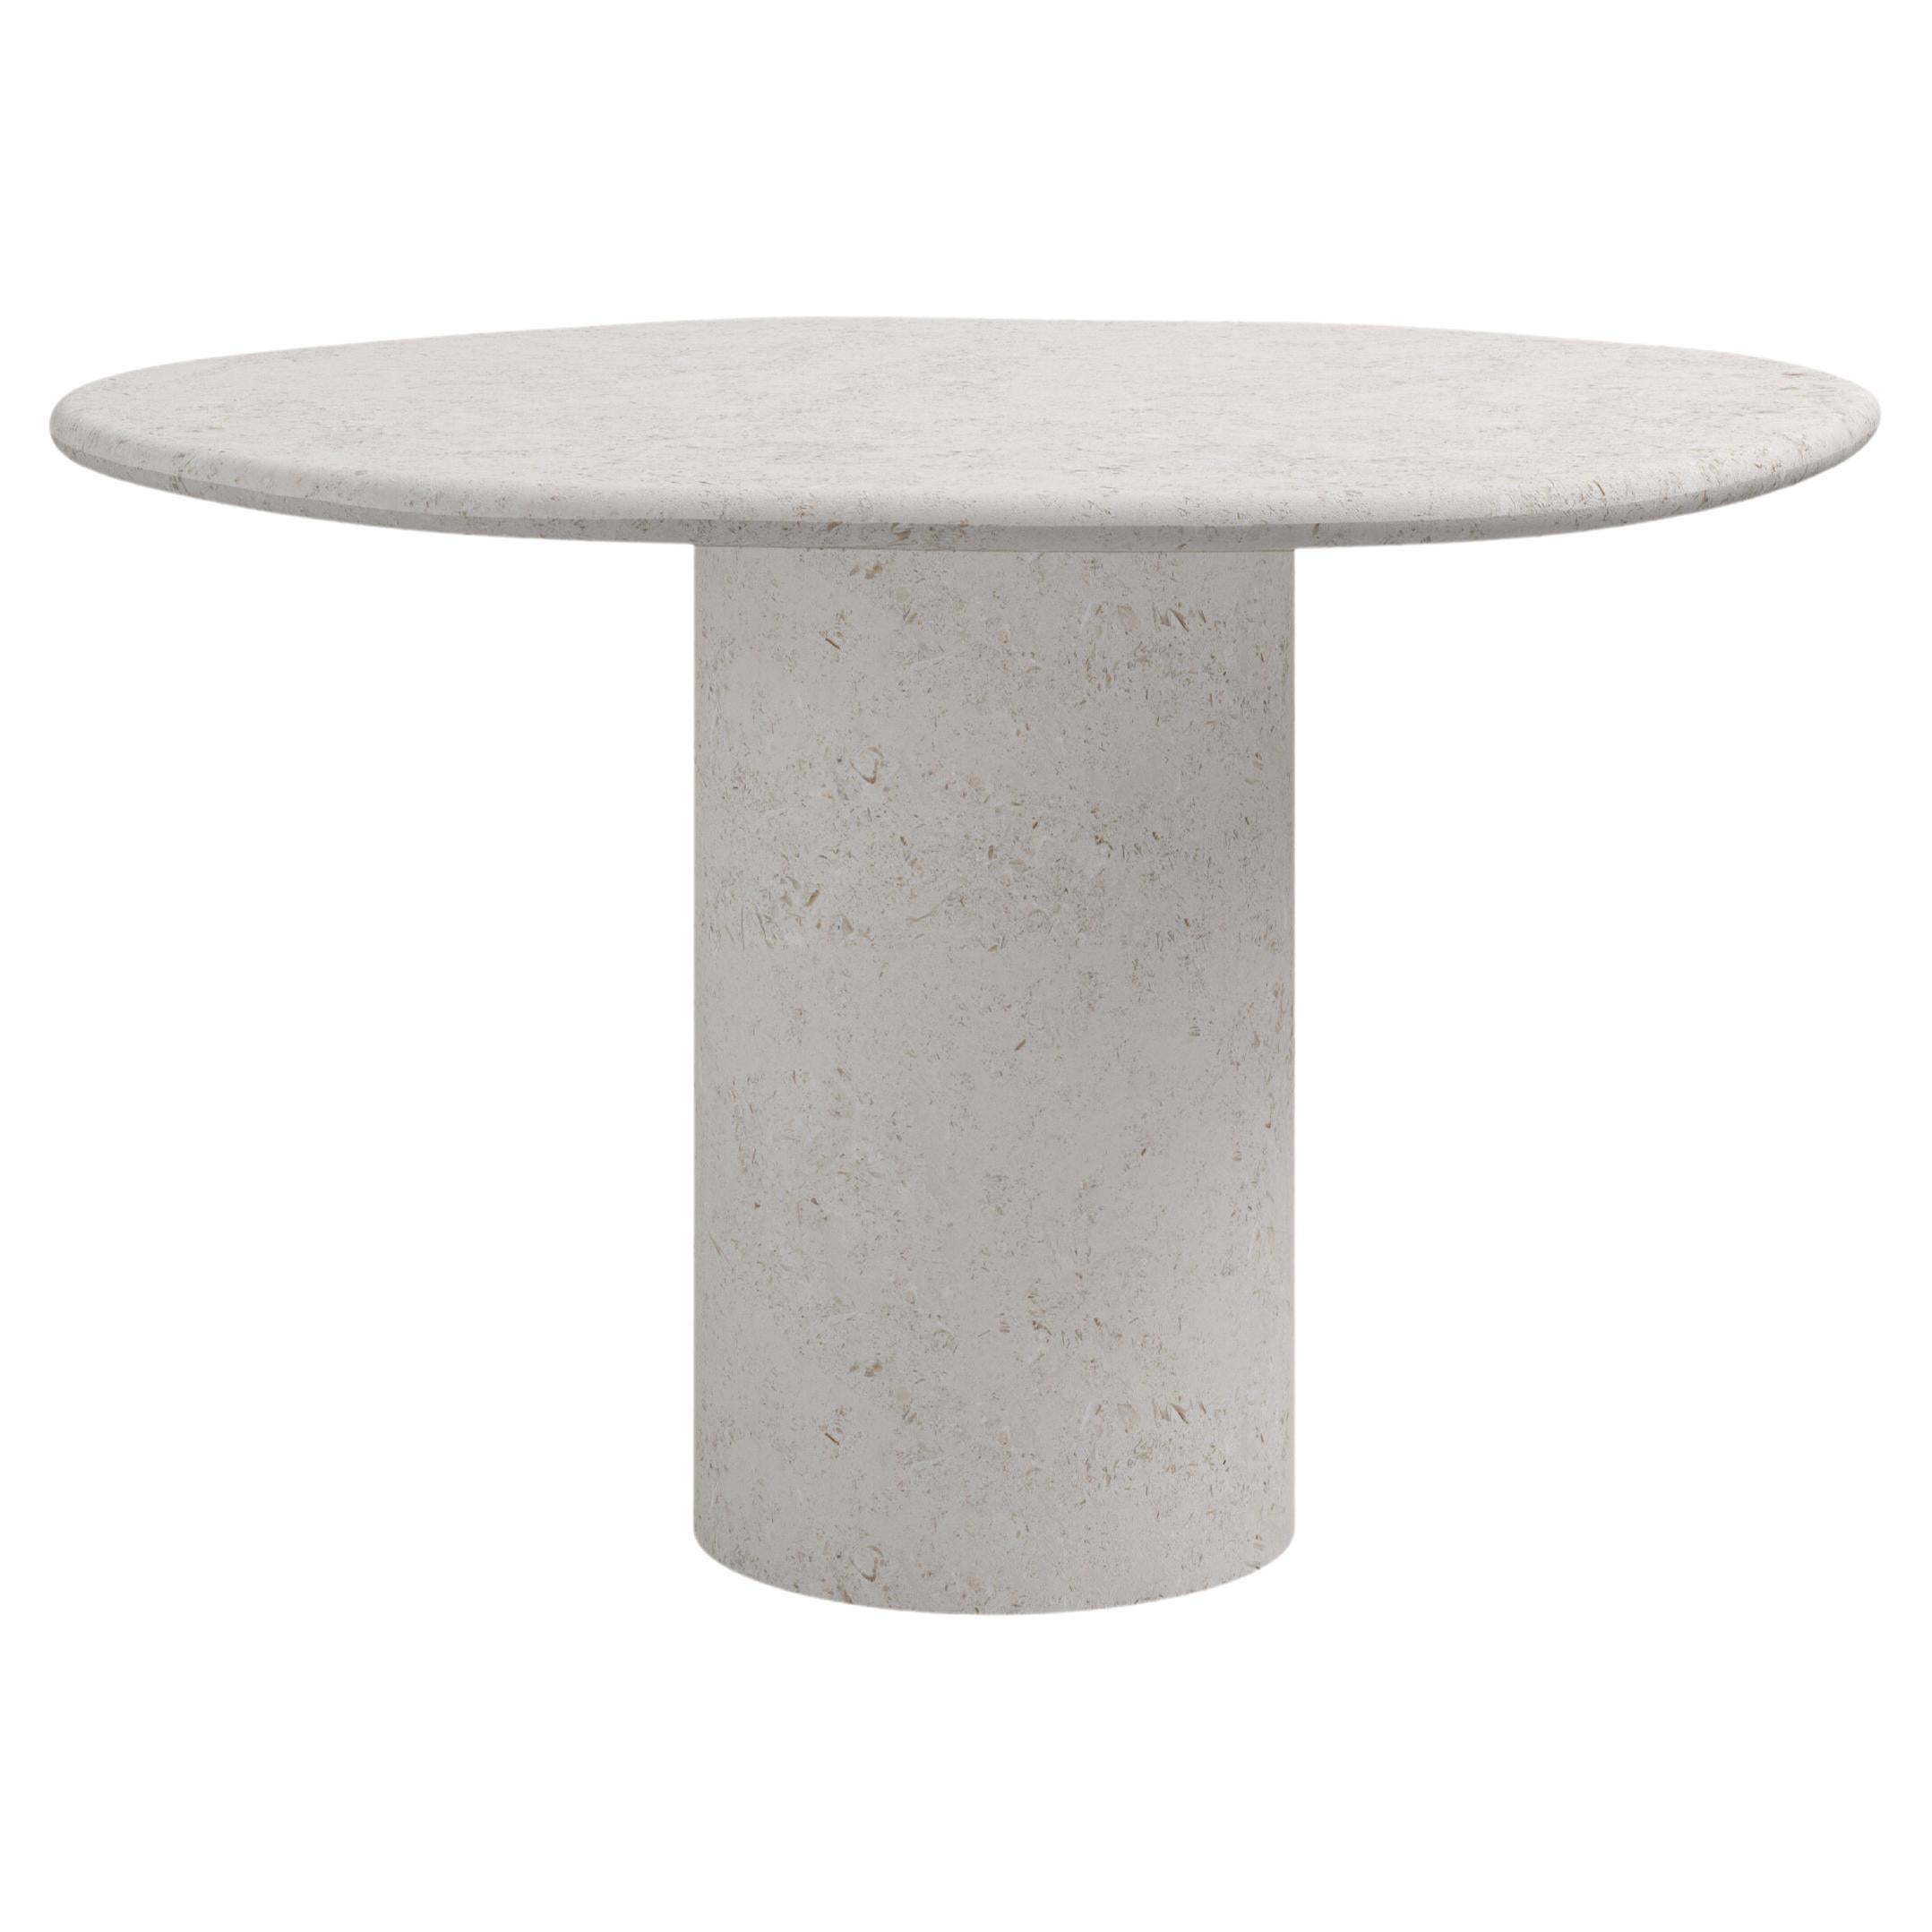 FORM(LA) Lago Round Dining Table 60”L x 60”W x 30”H Limestone Oceano For Sale